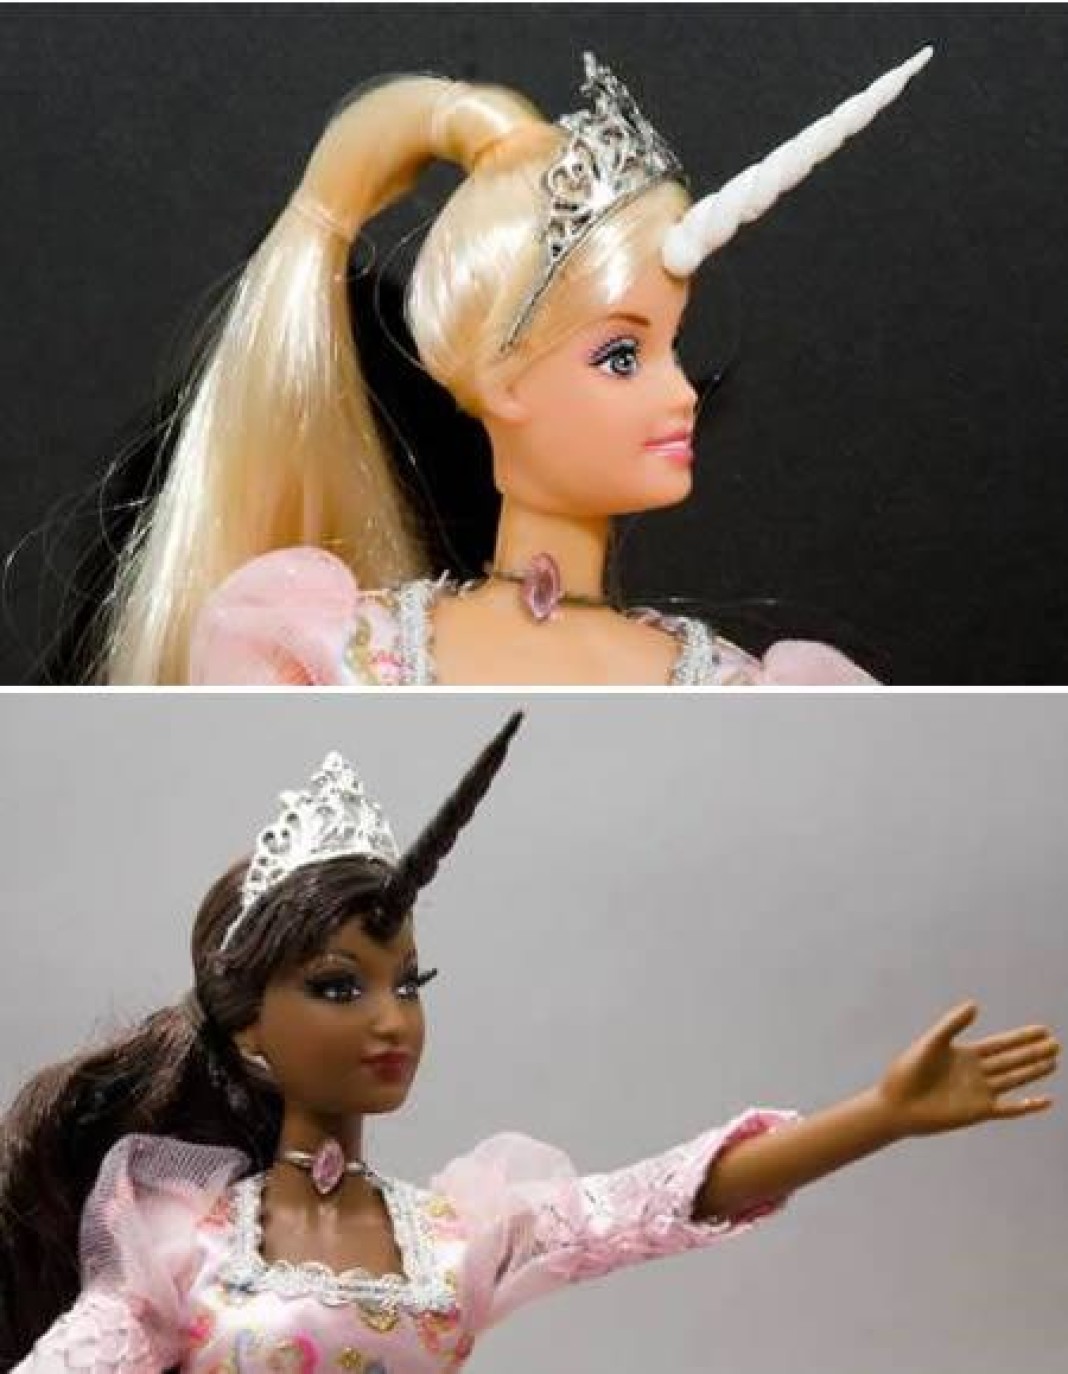 Weird barbie dolls